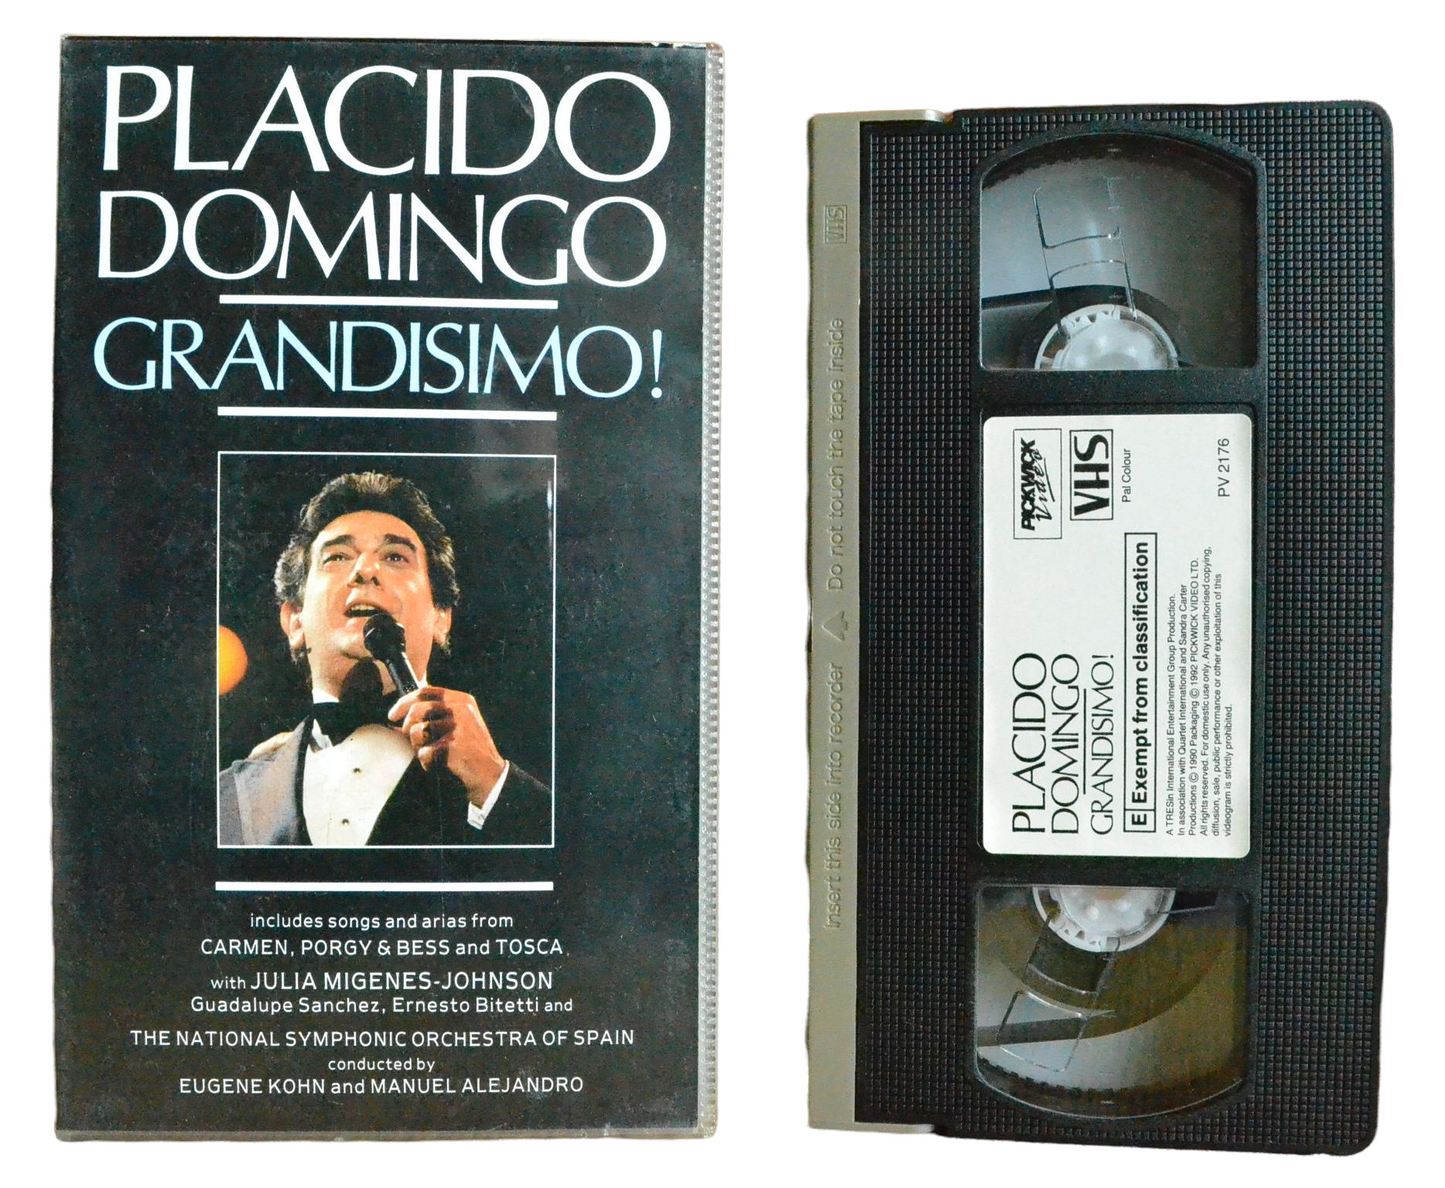 Placido Domingo Grandisimo! - Pickwick Video - Music - Pal VHS-